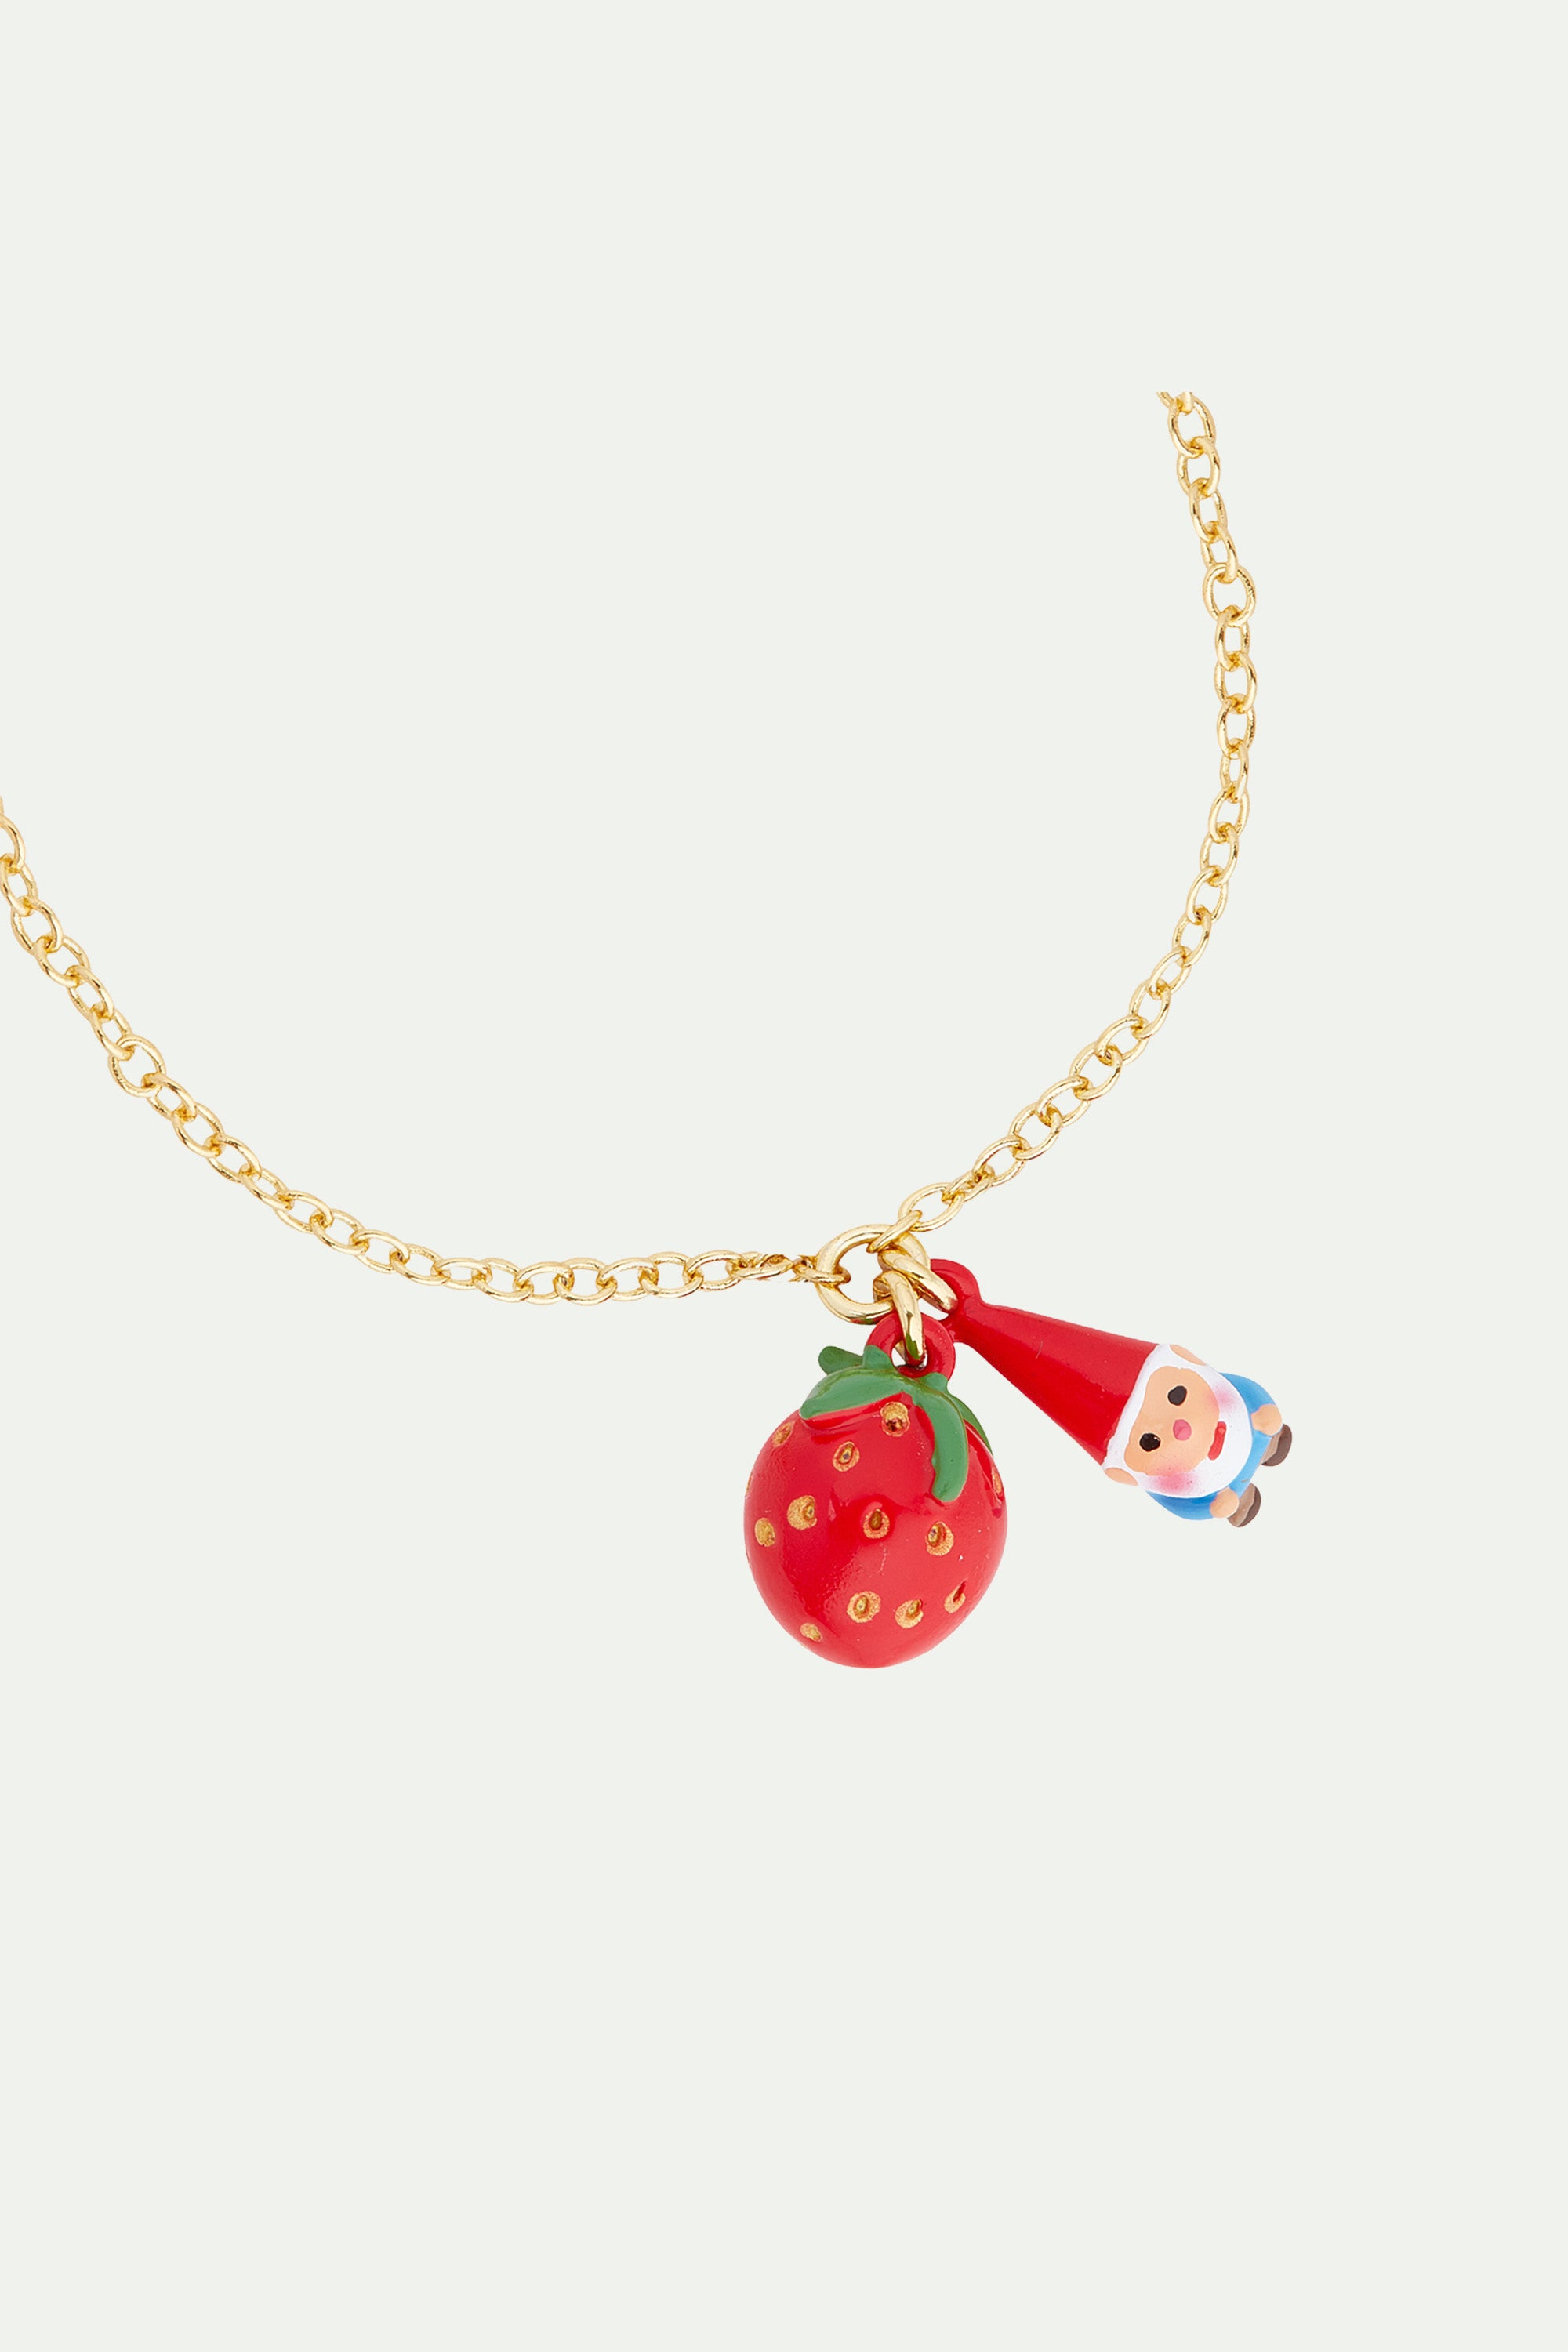 Strawberry and garden gnome charm bracelet